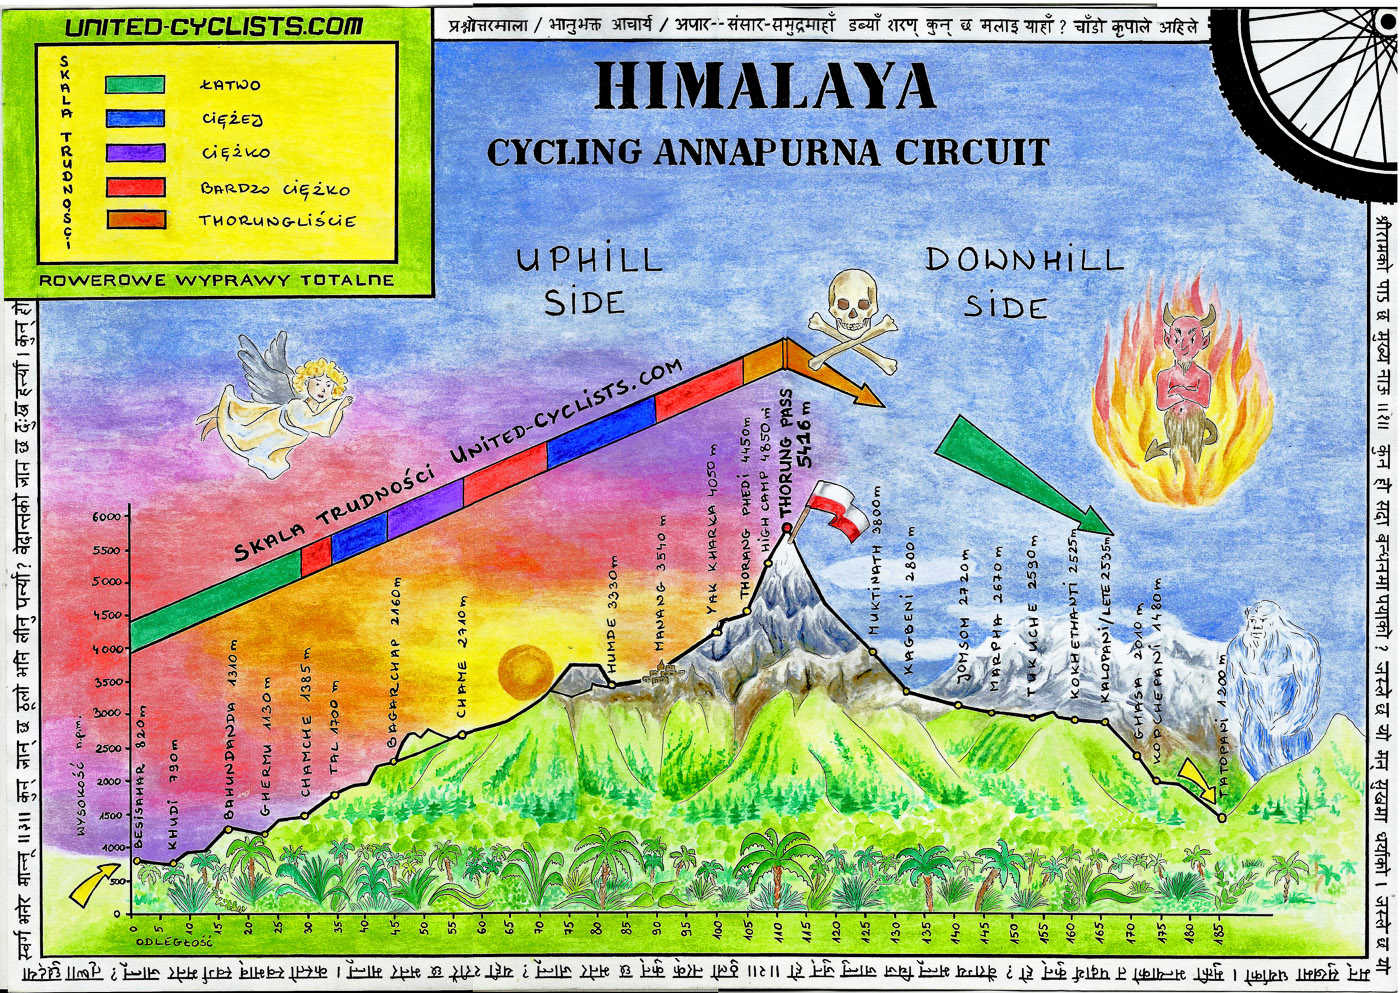 Annapurna Kreidler Test Challenge 2014 12 (fot. united-cyclists.com)